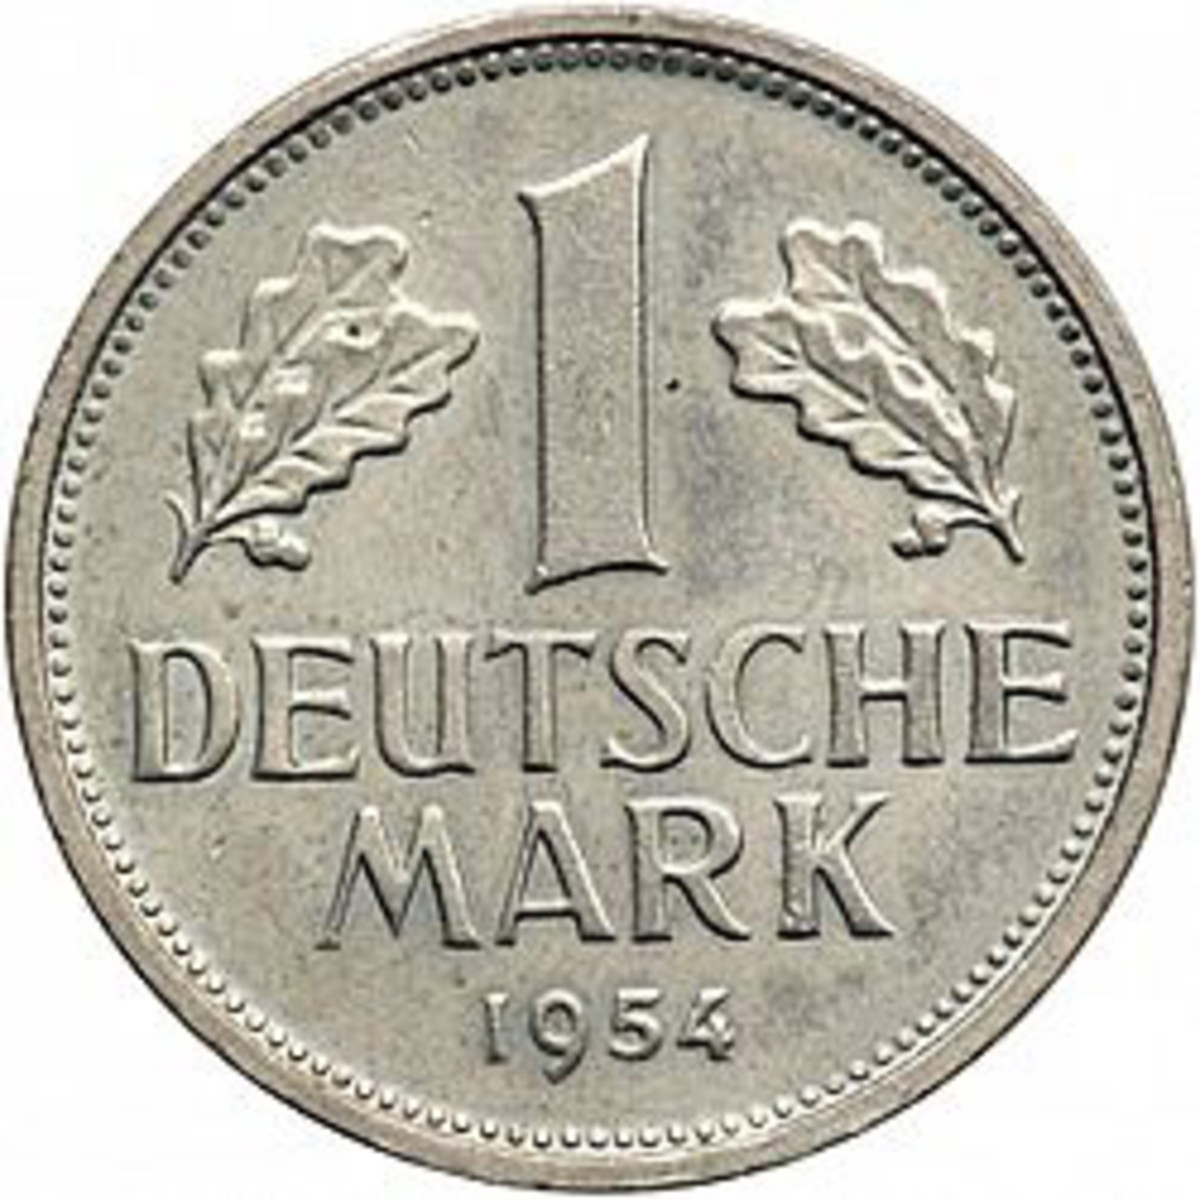 Legal tender or not, Germans still like their German rather than their euro coins.